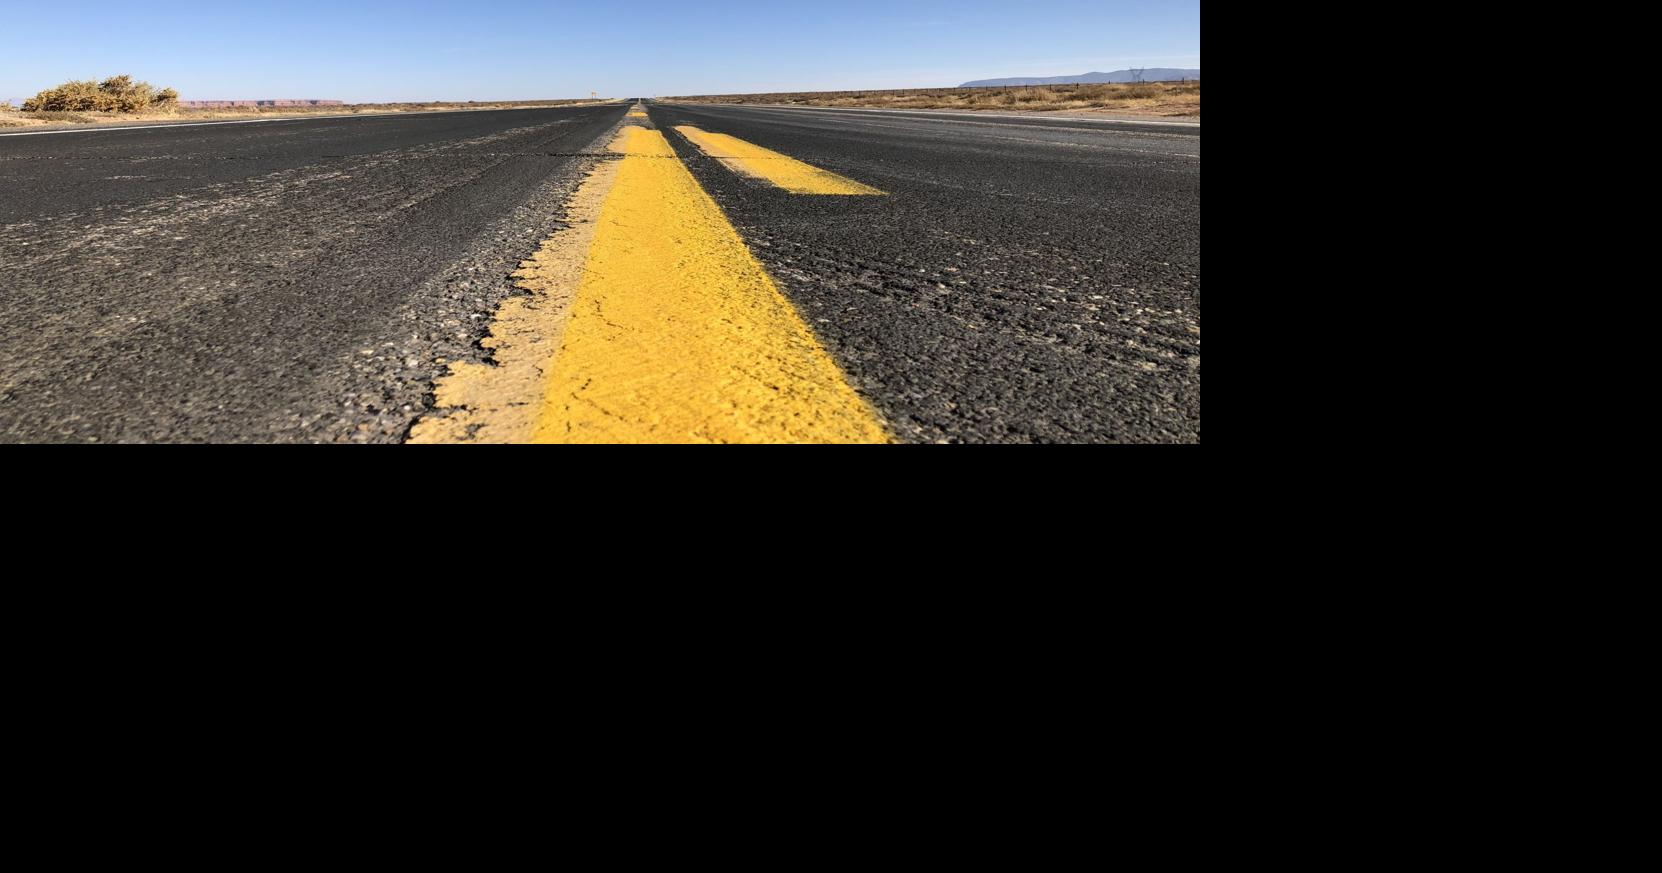 A giant tumbleweed rolled down a California highway : NPR